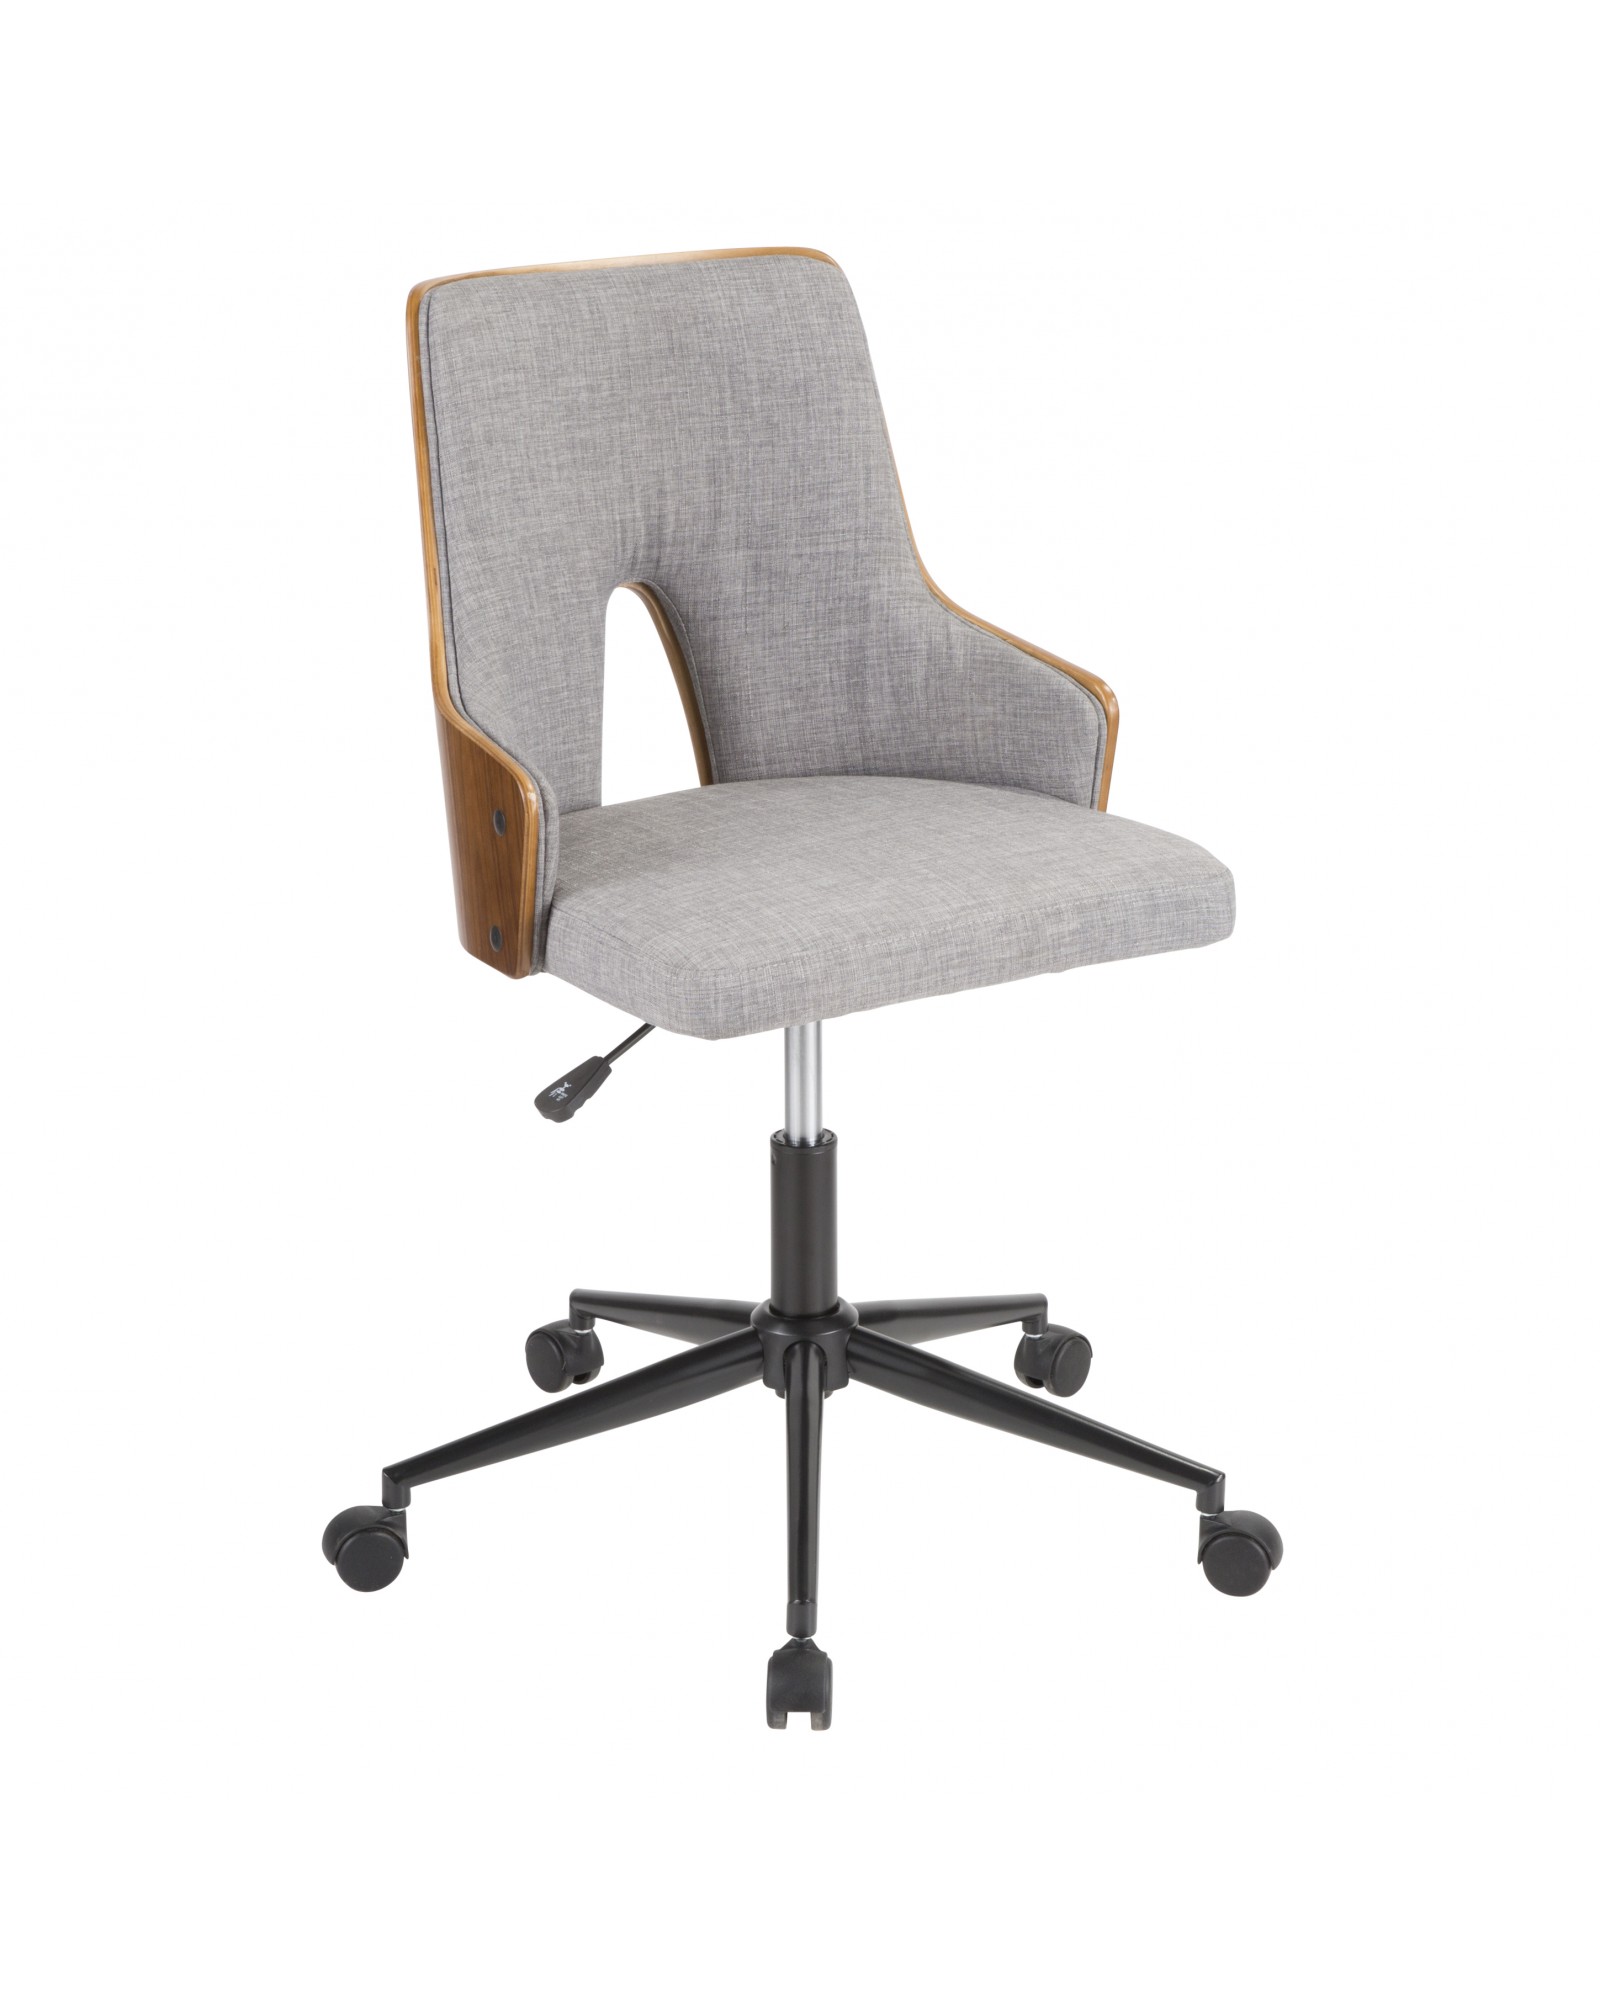 Stella Mid-Century Modern Office Chair in Walnut Wood and Grey Fabric